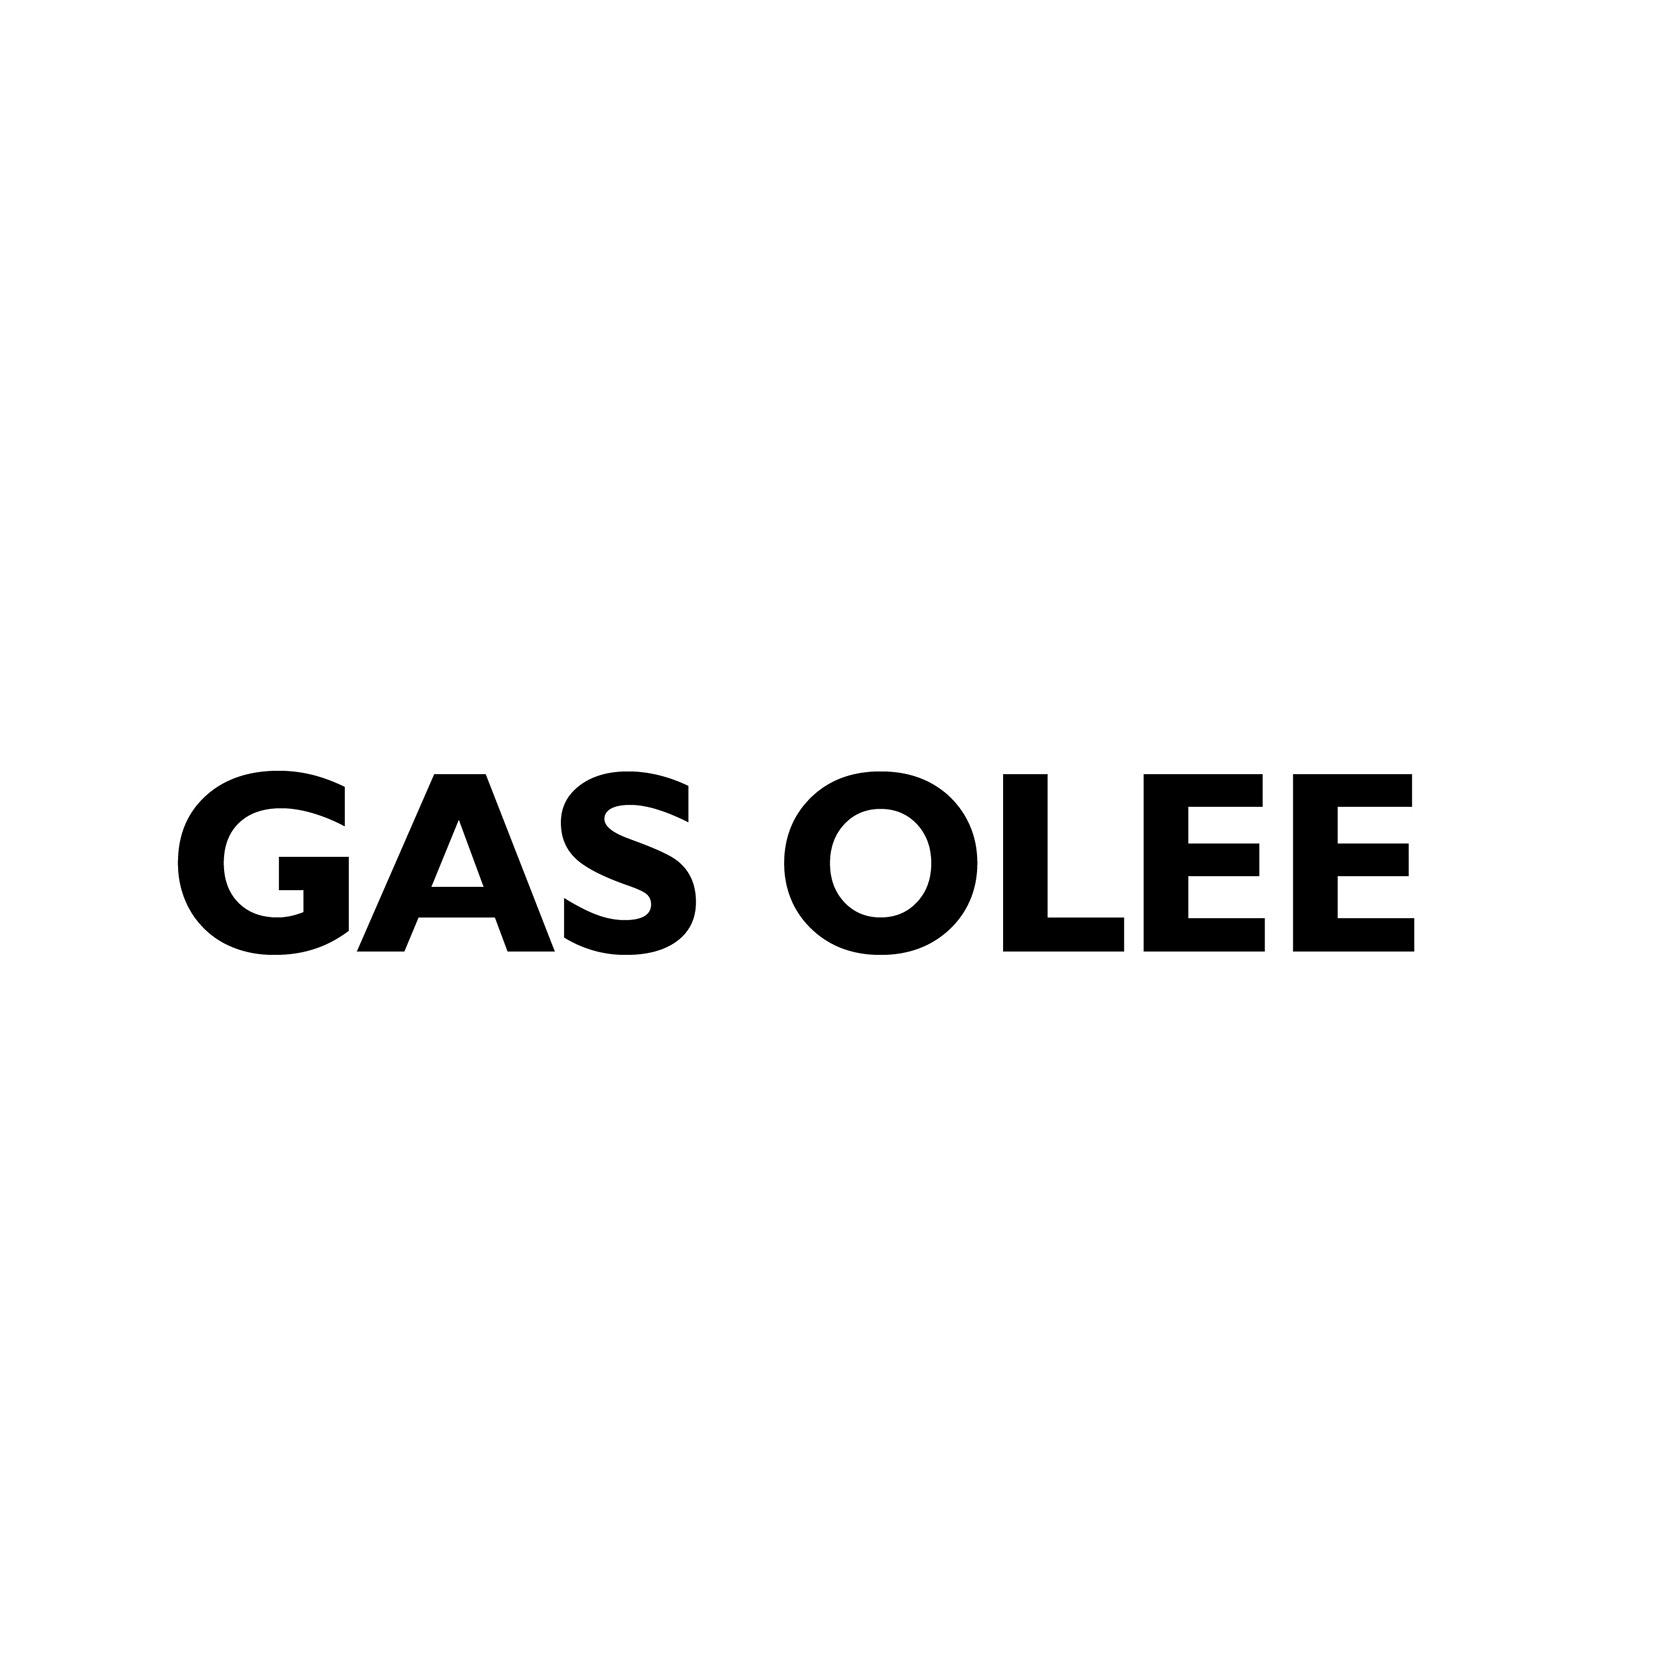 GAS OLEE 商标公告